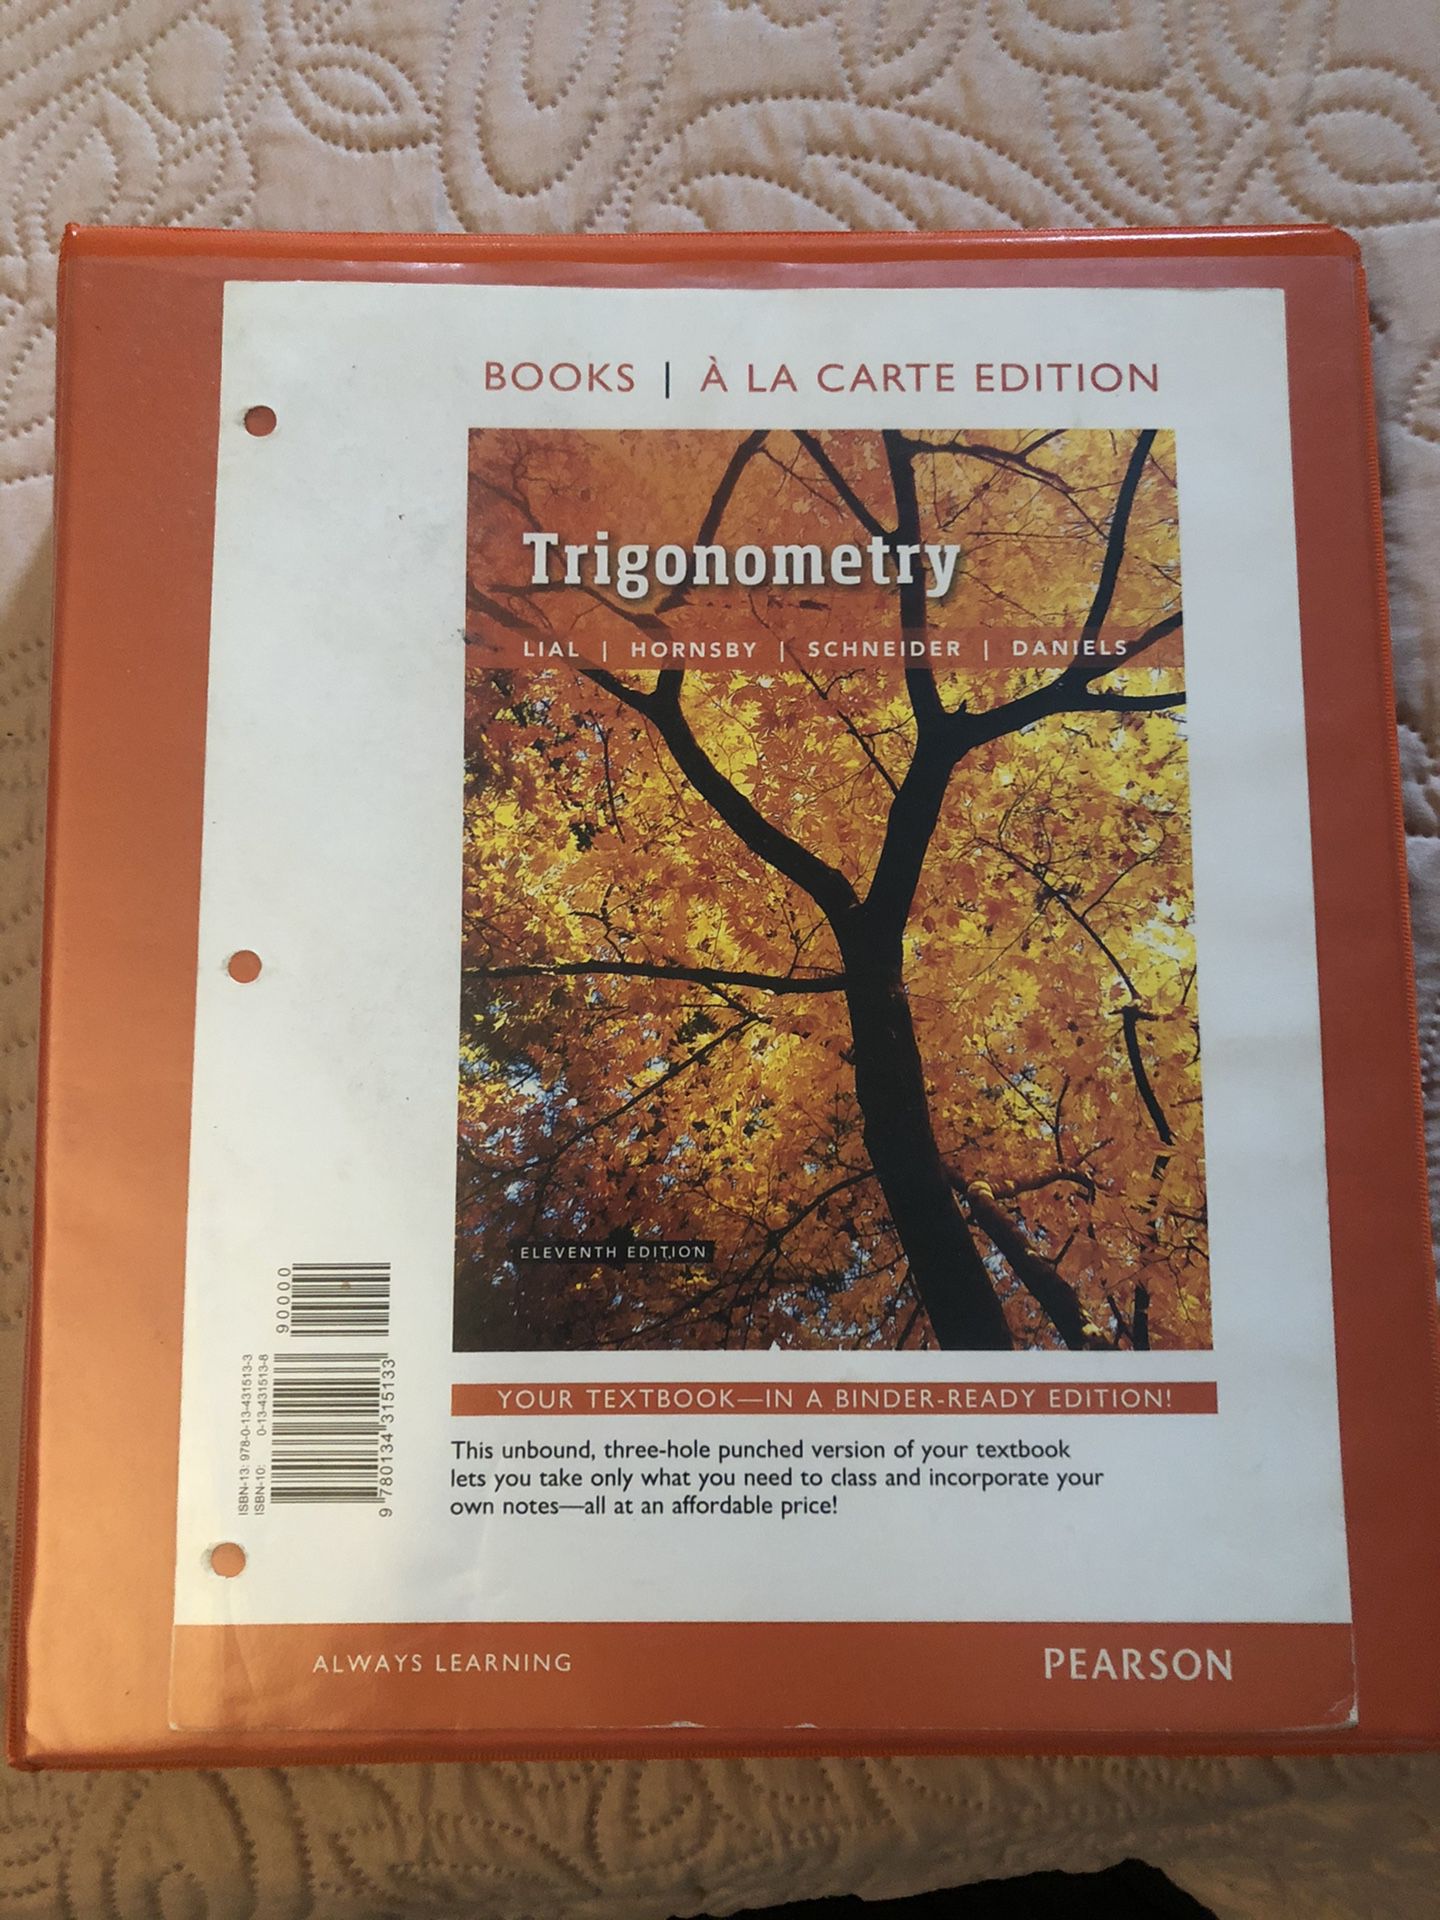 Trigonometry A la Carte Edition “11th Edition” Pearson Loose-leaf